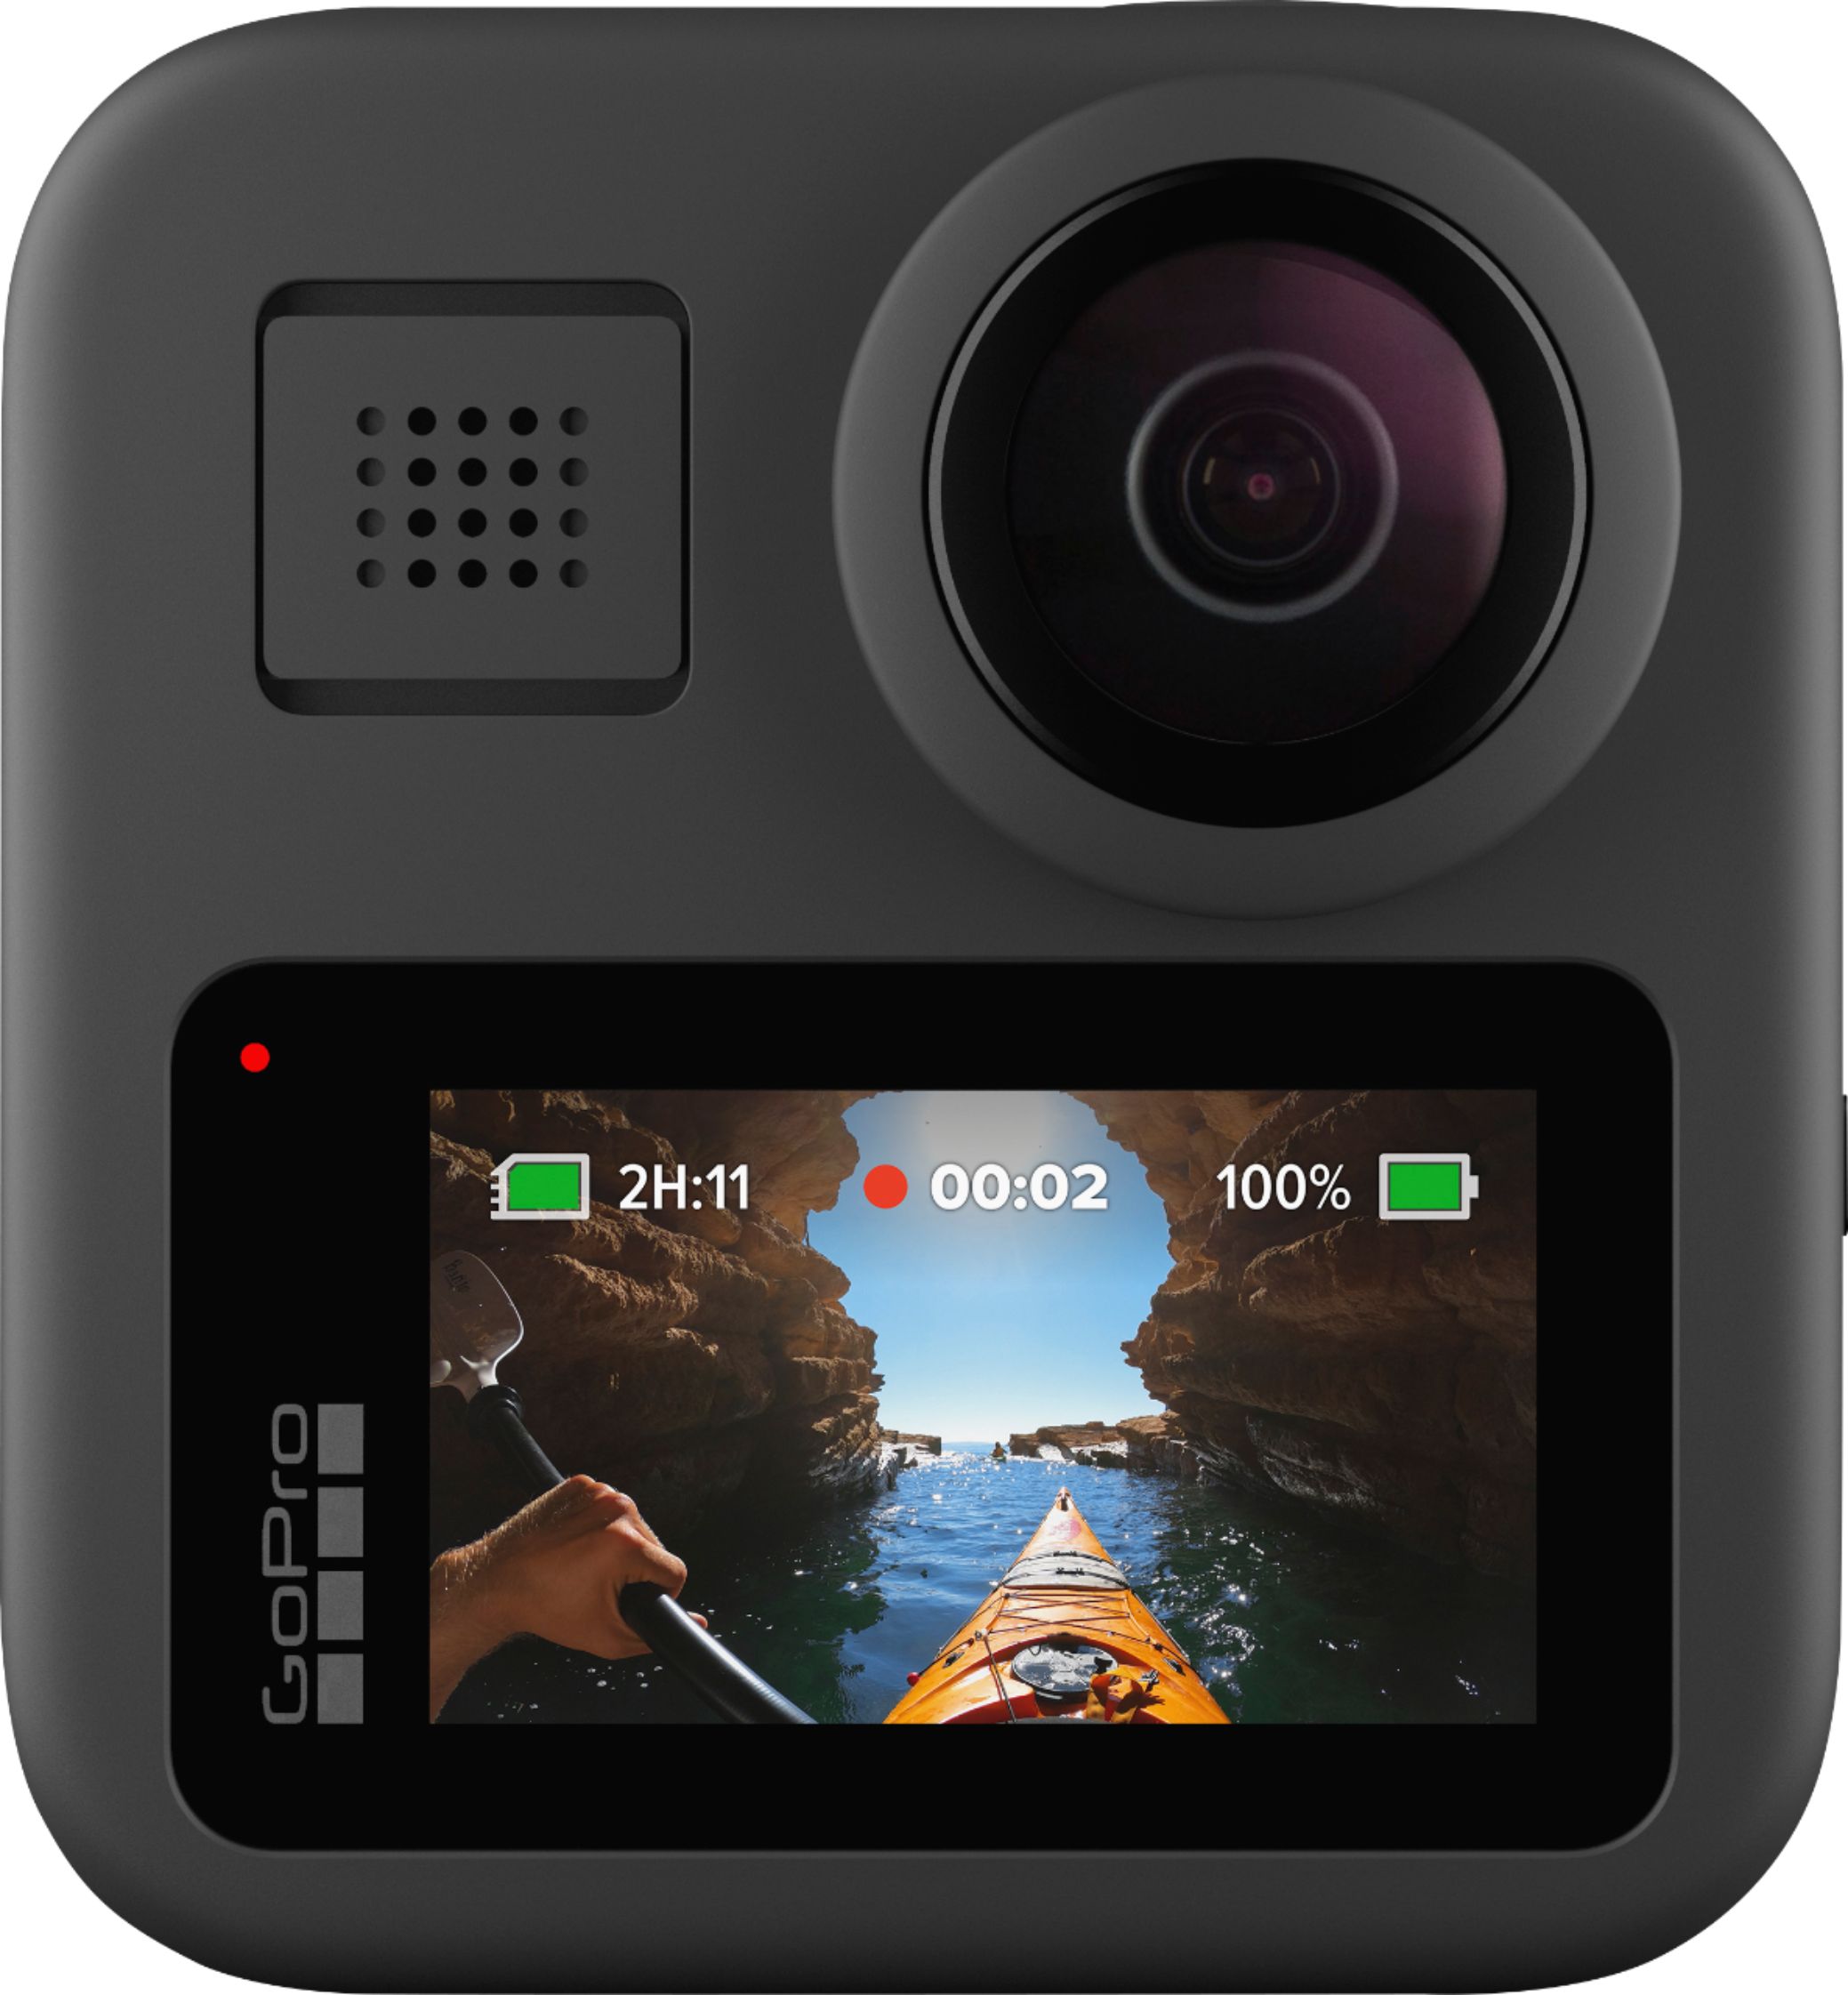 GoPro - MAX 360 Degree 5.6K Action Camera - Black